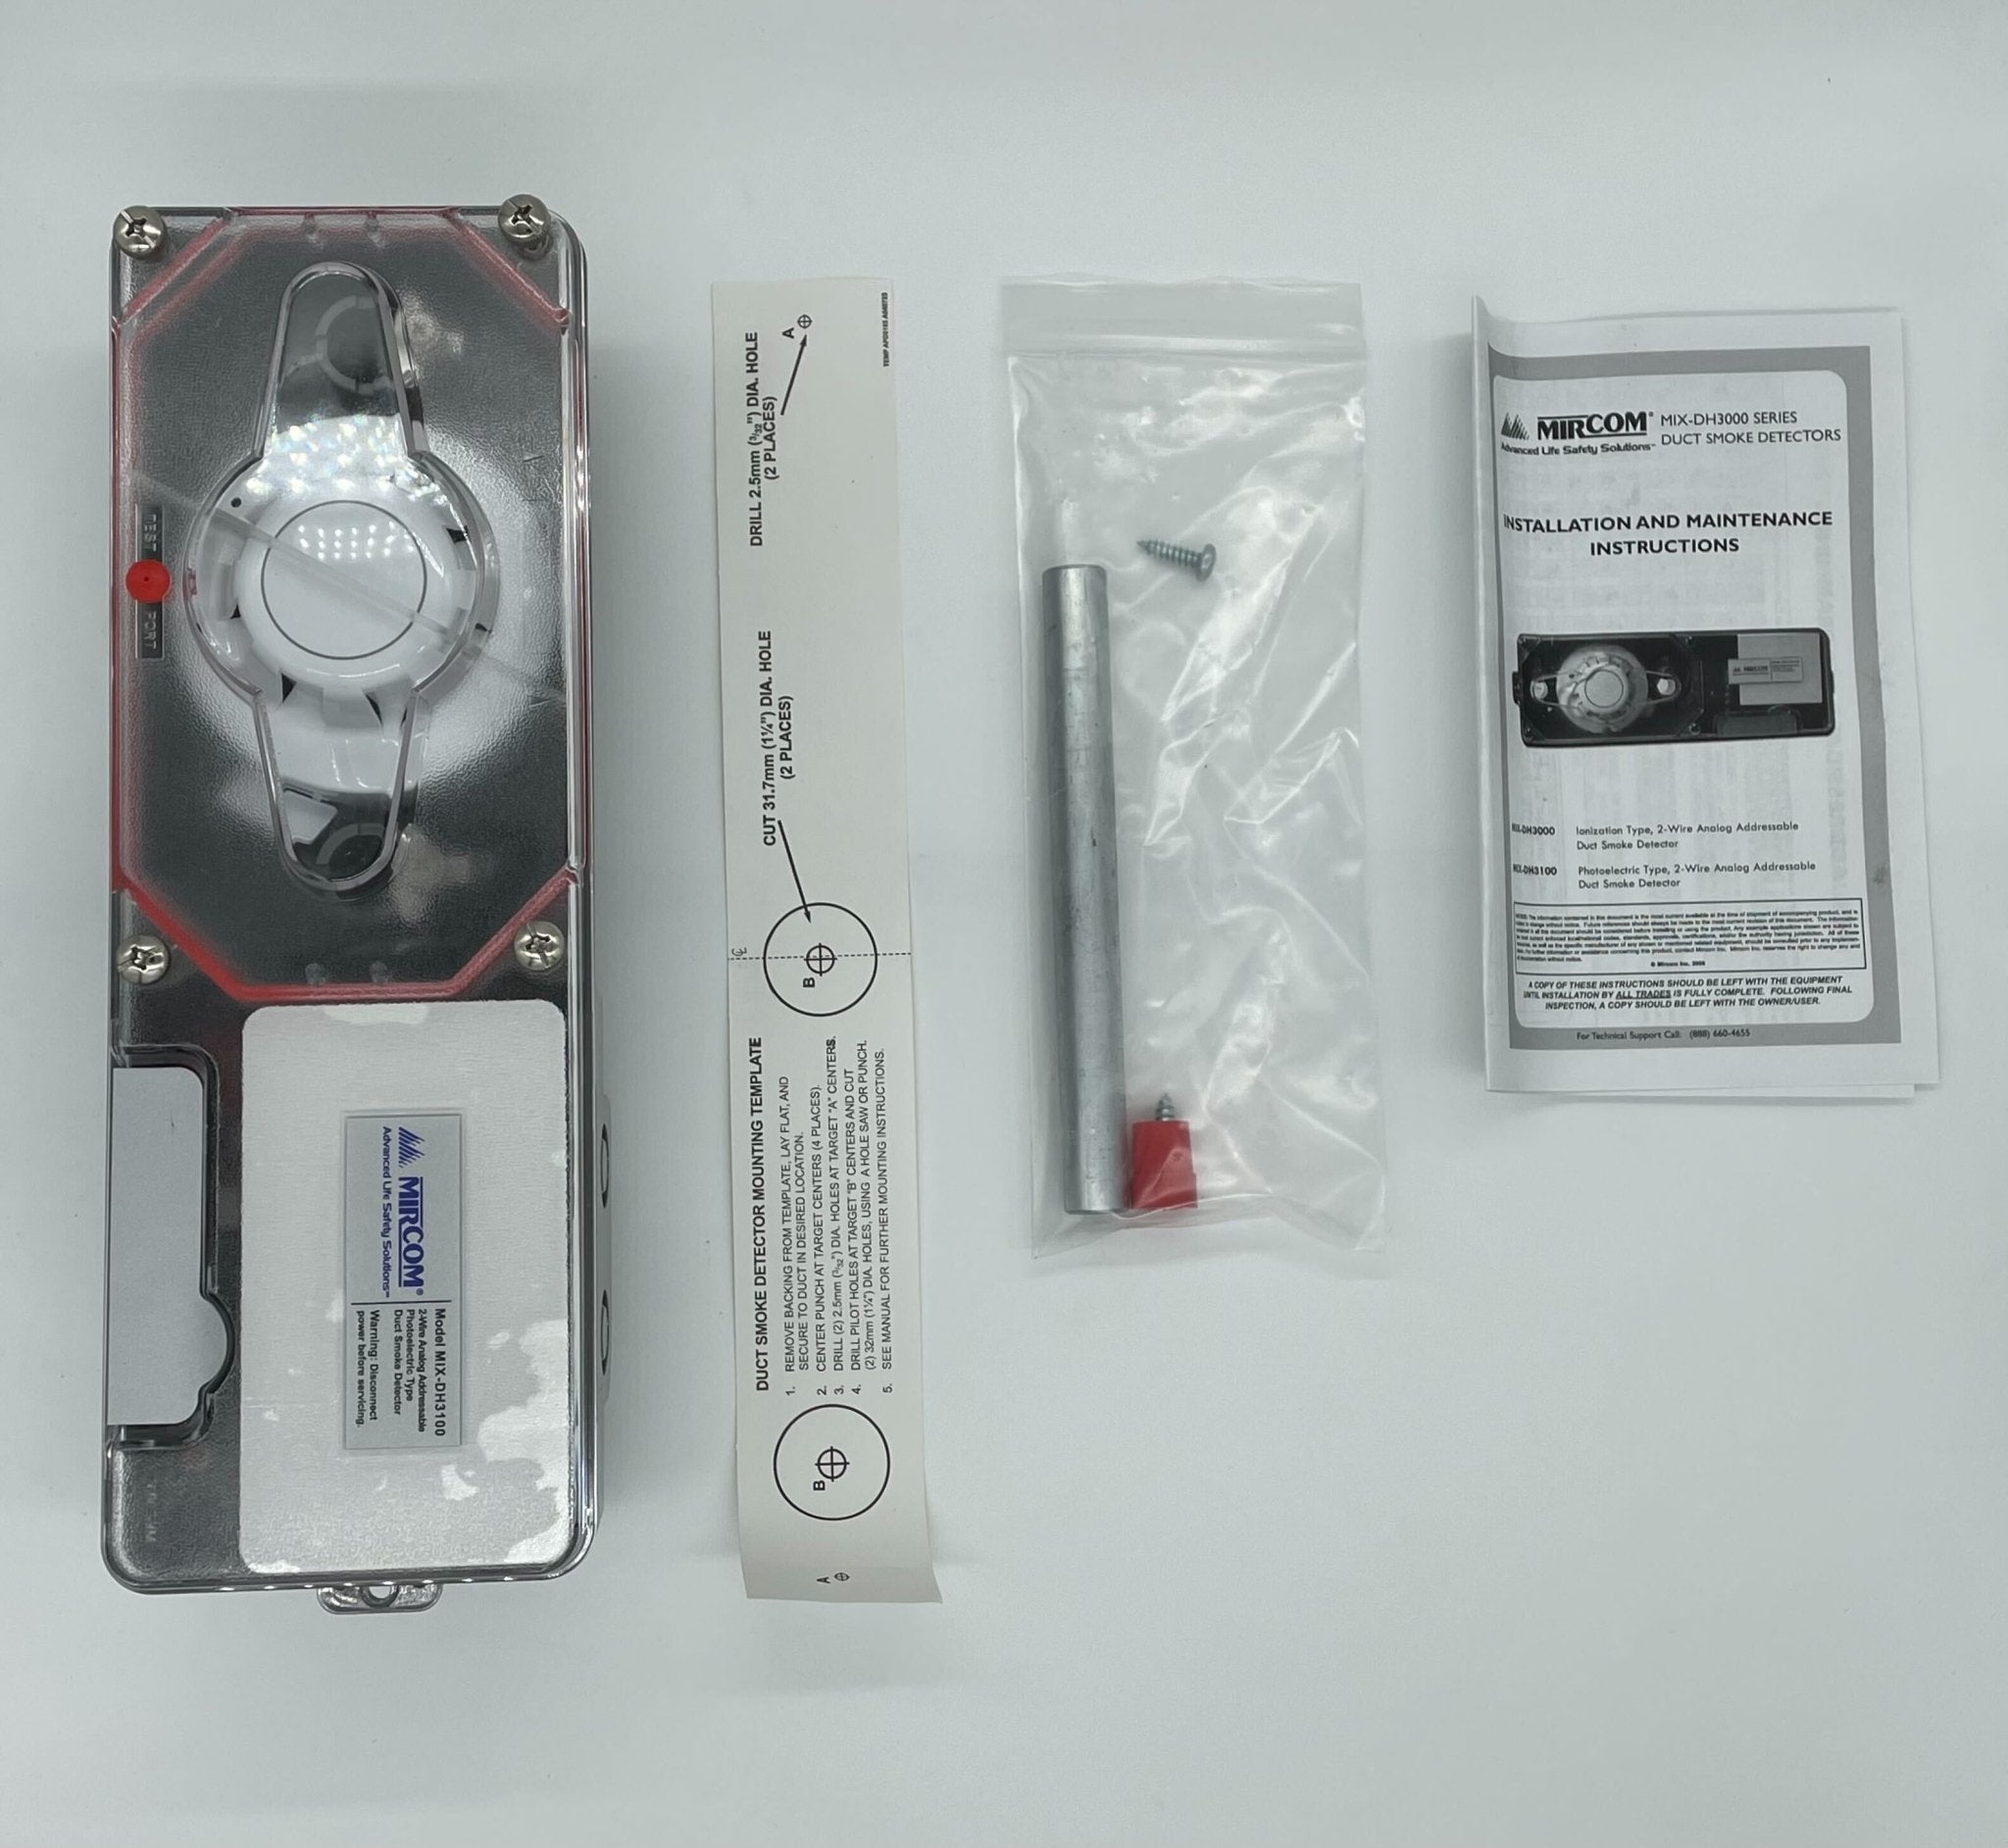 Mircom MIX-DH3100 Addressable Duct Smoke Detector - The Fire Alarm Supplier